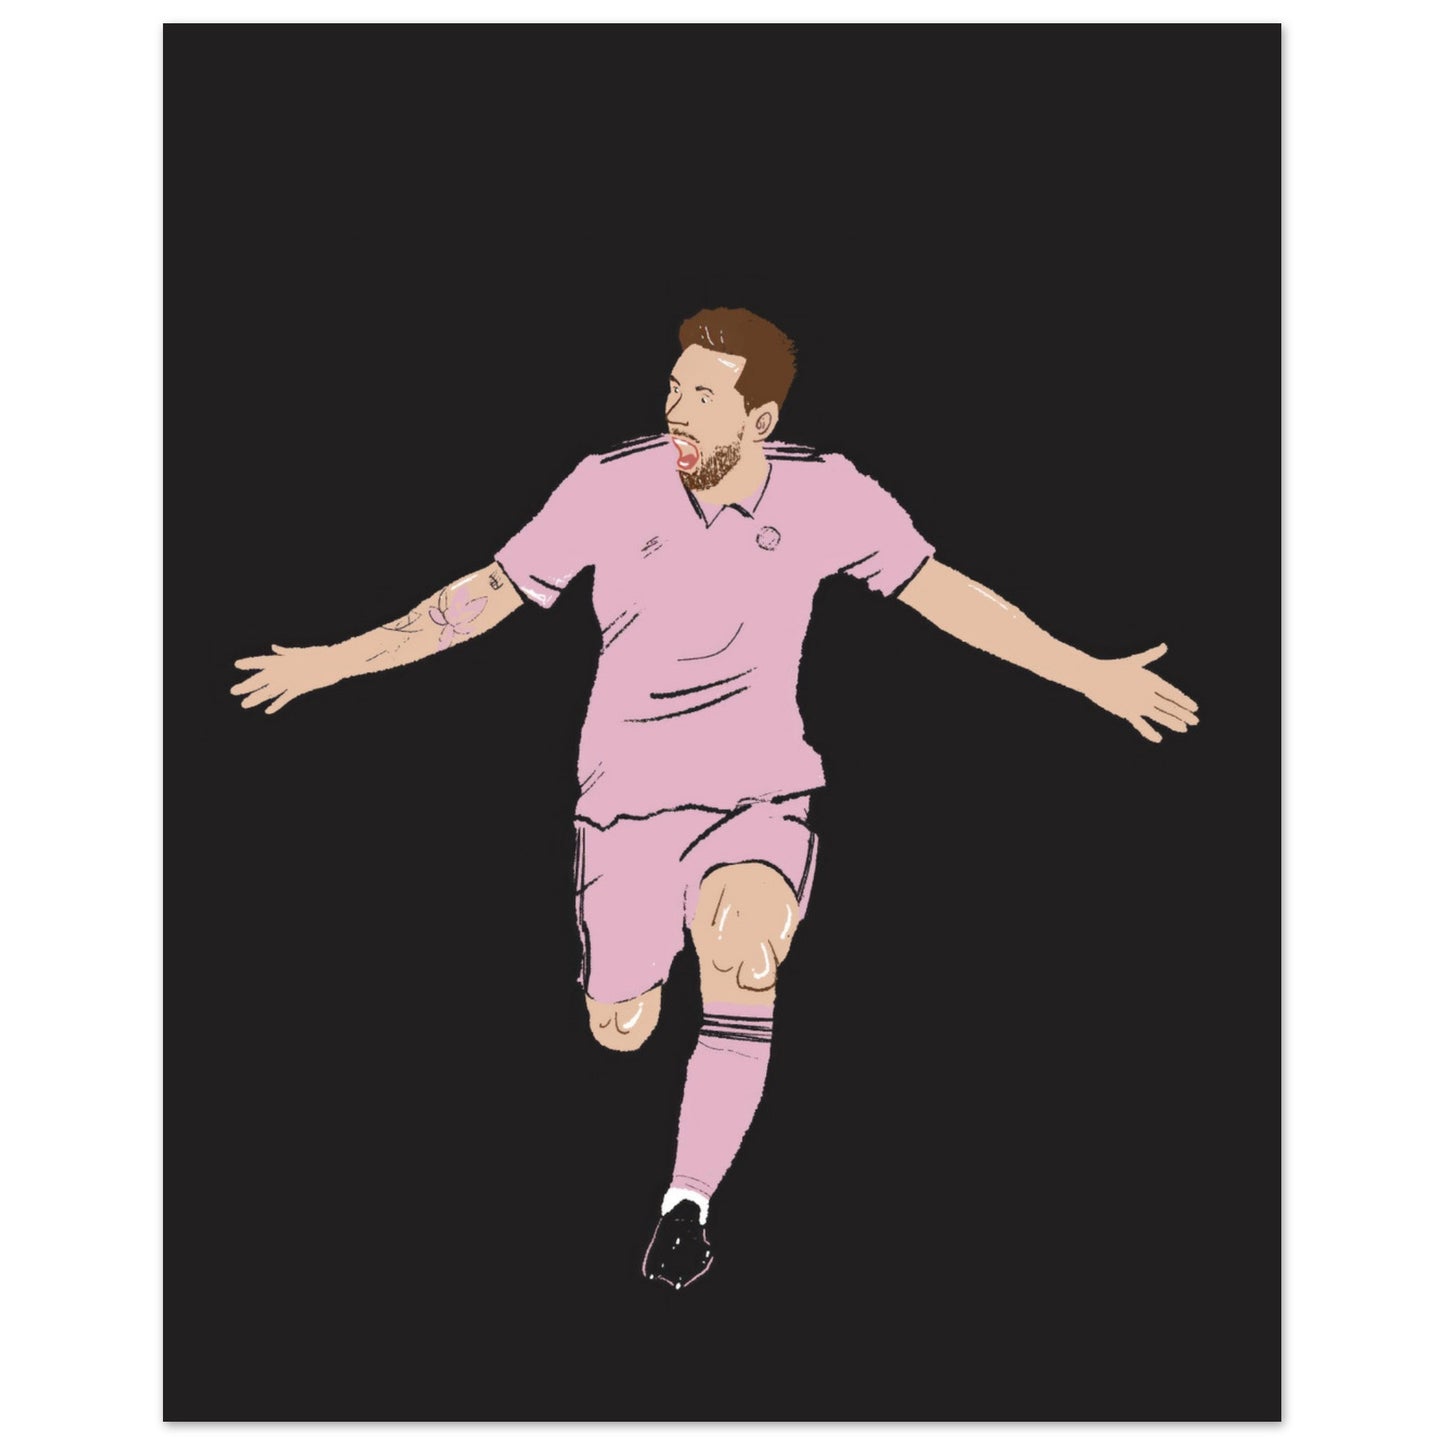 Pink Glory - Lionel Messi Wall Art Inter Miami